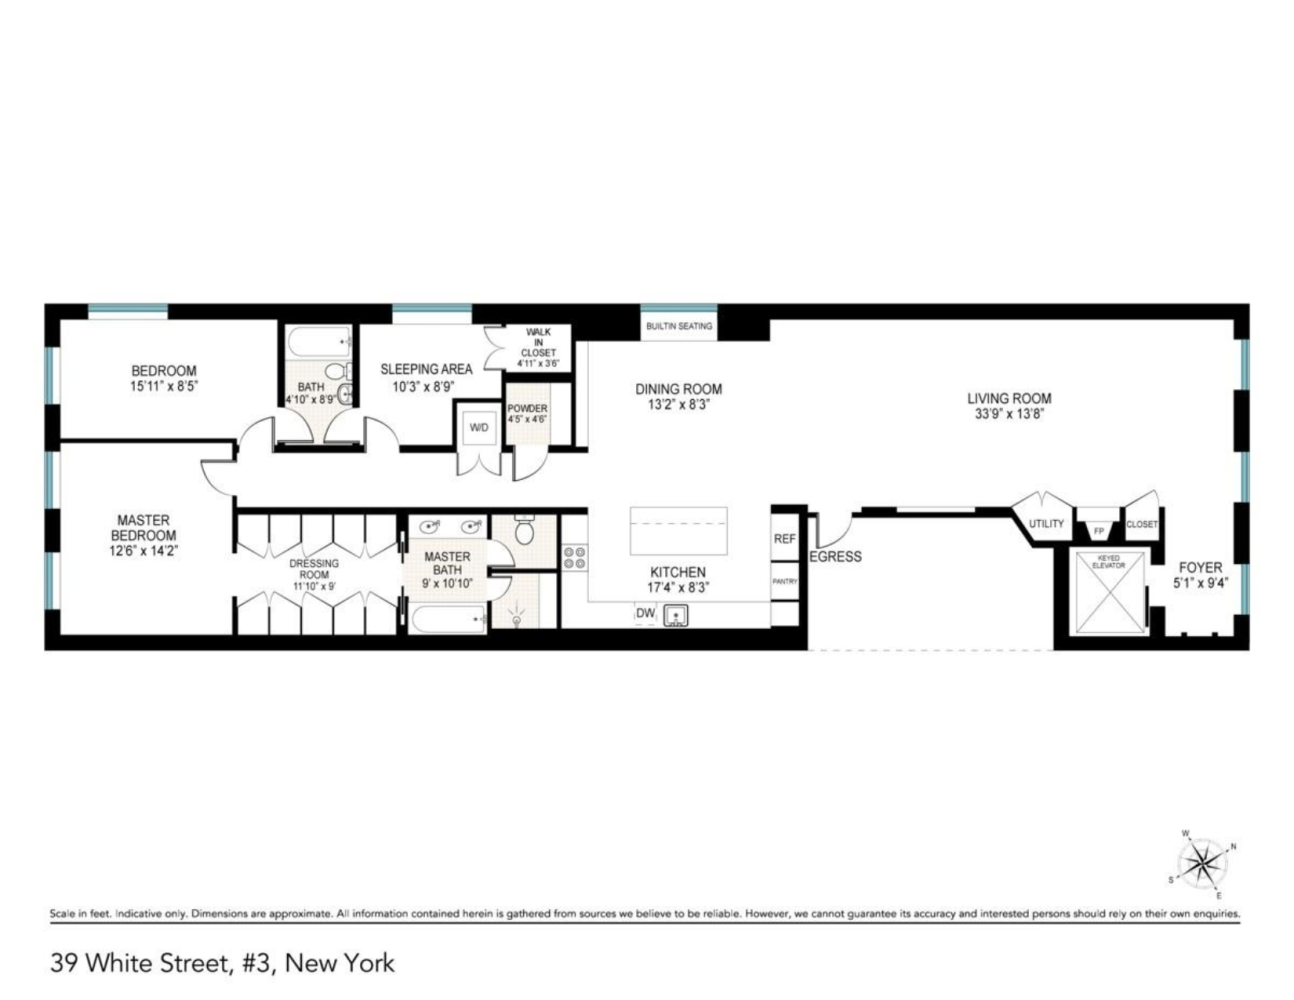 Floorplan for 39 White Street, 3A